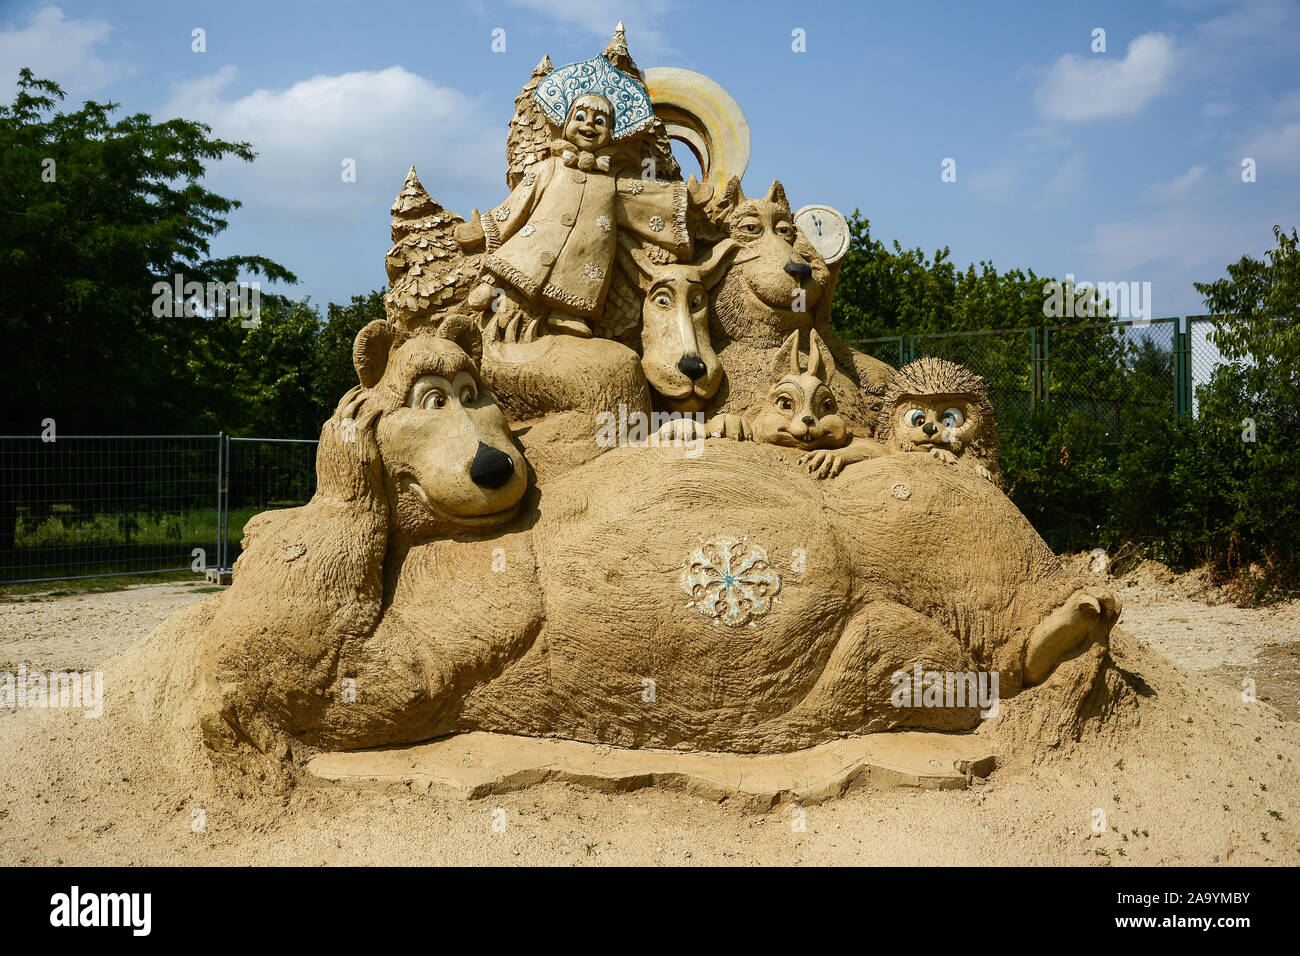 BURGAS, BULGARIA - JULY 19, 2014: Festival of Sand Sculptures 